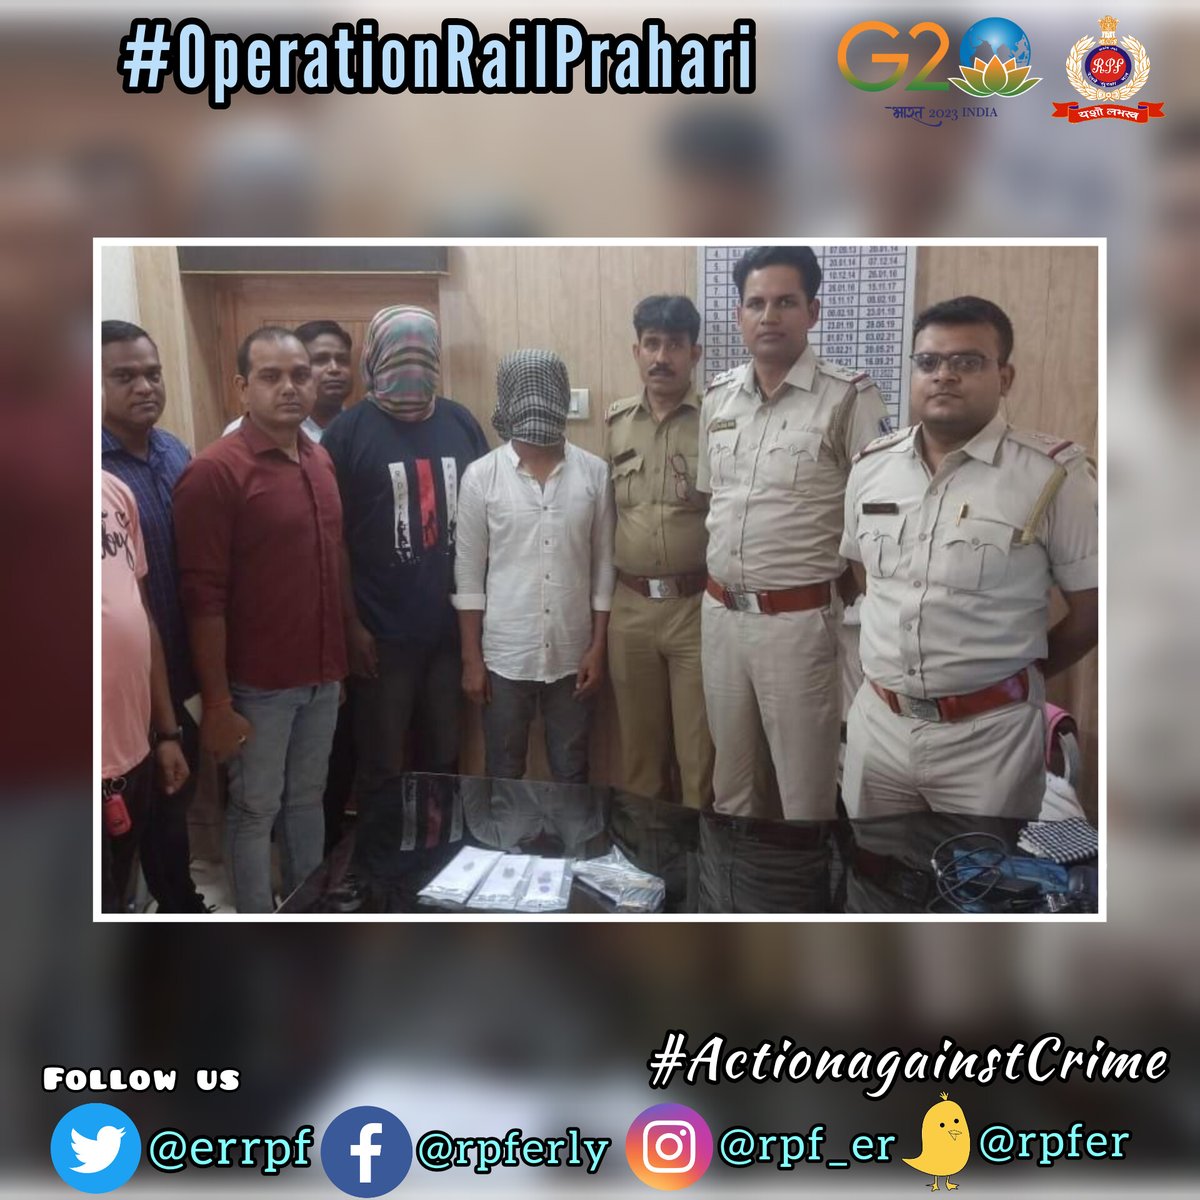 Snatching plan foiled....02 notorious armed criminals arrested....
#OperationRailPrahari
#Sentinelonrail 
#ActionagainstCrime 
@RPF_INDIA @RailMinIndia @EasternRailway